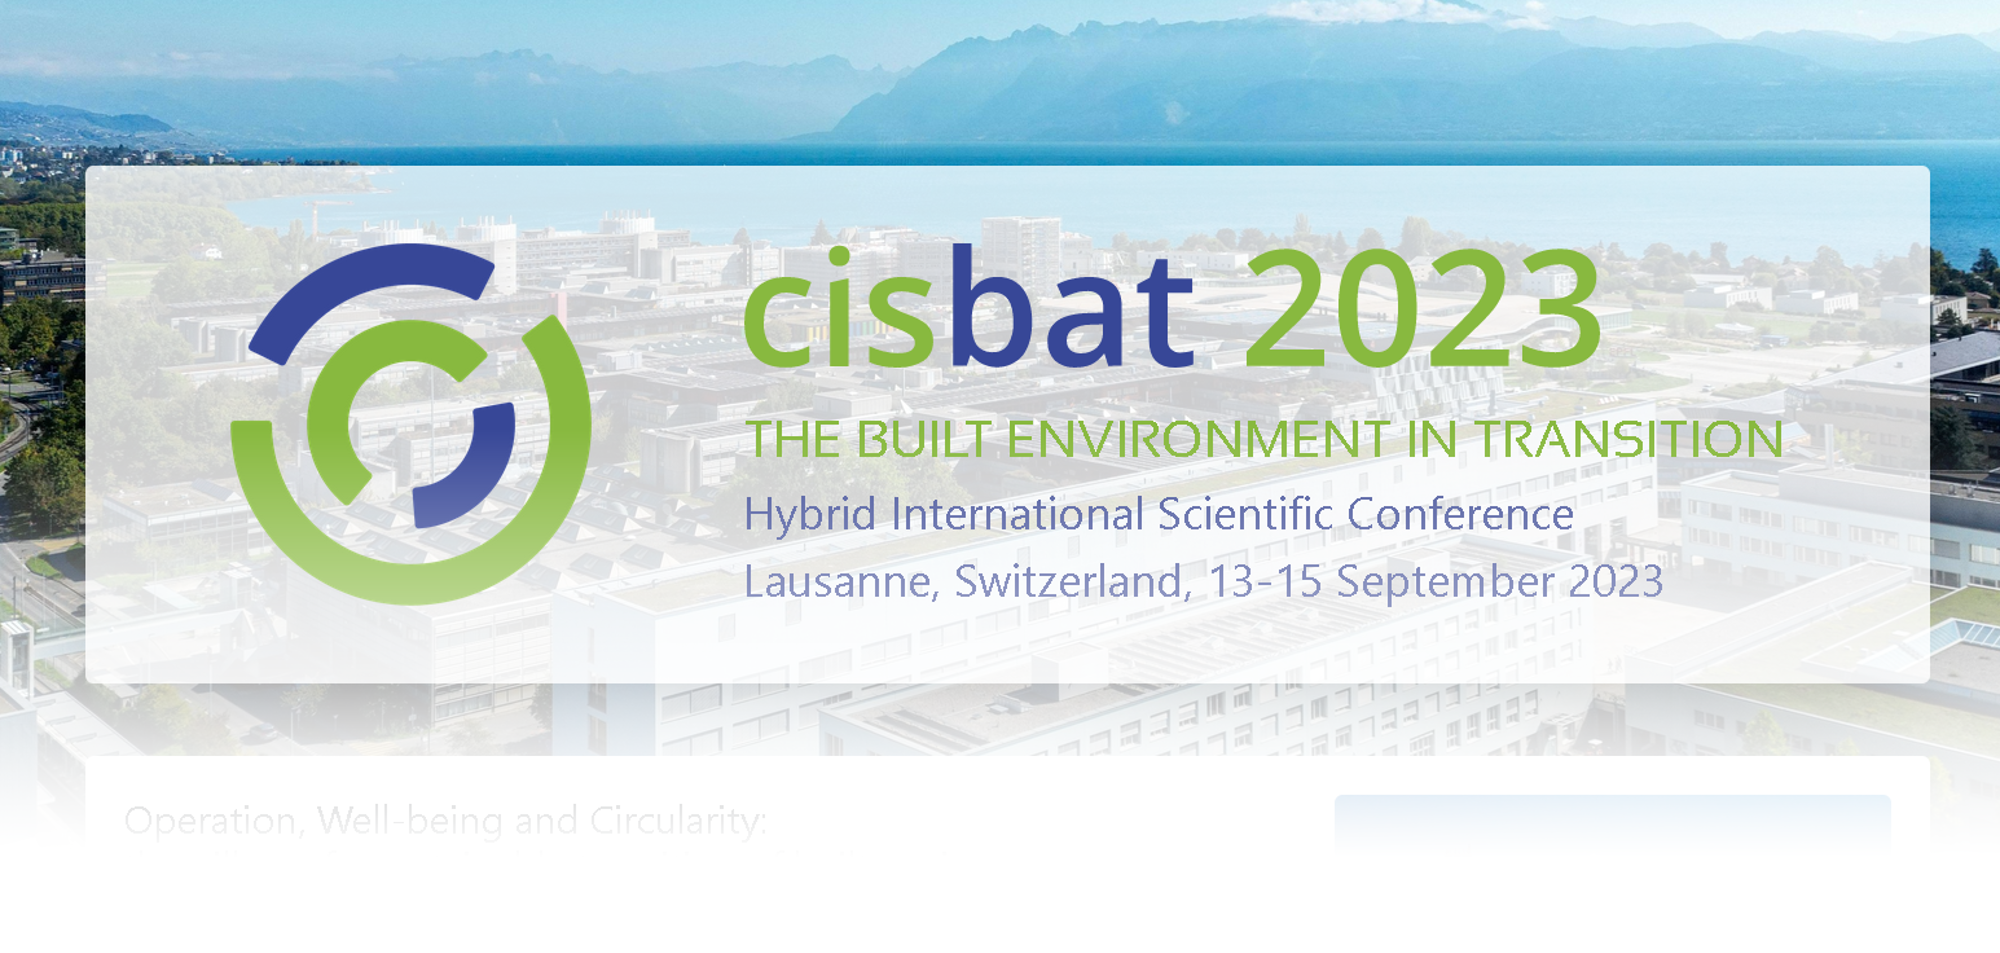 CISBAT 2023 THE BUILT ENVIRONMENT IN TRANSITION Hybrid International Scientific Conference Lausanne, Switzerland, 13-15 September 2023